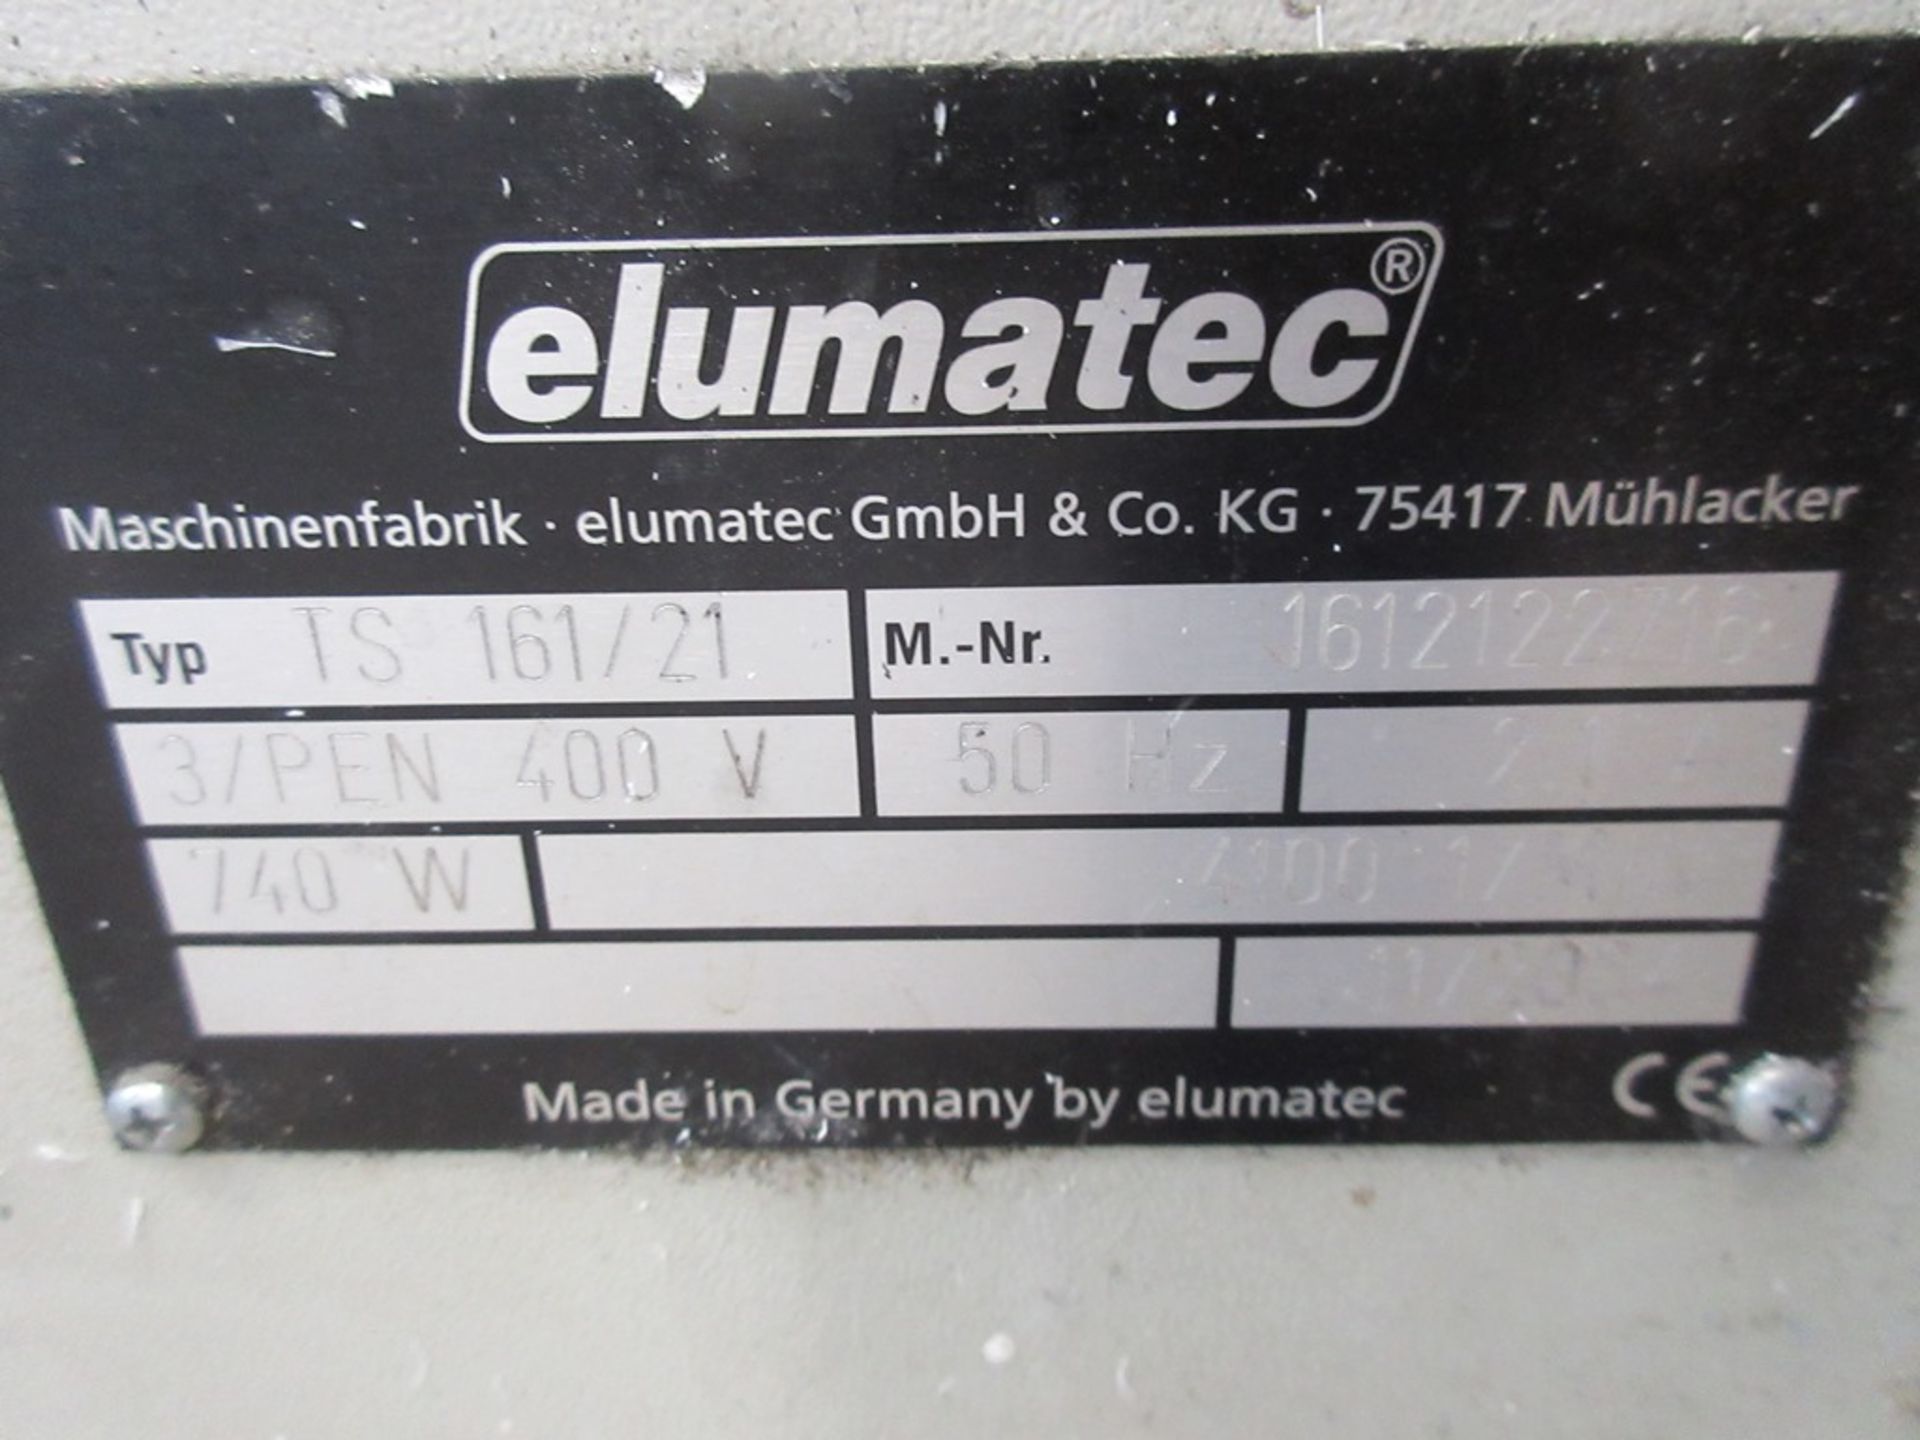 Elumatec TS 161 21 Table saw (2004) - Image 8 of 11